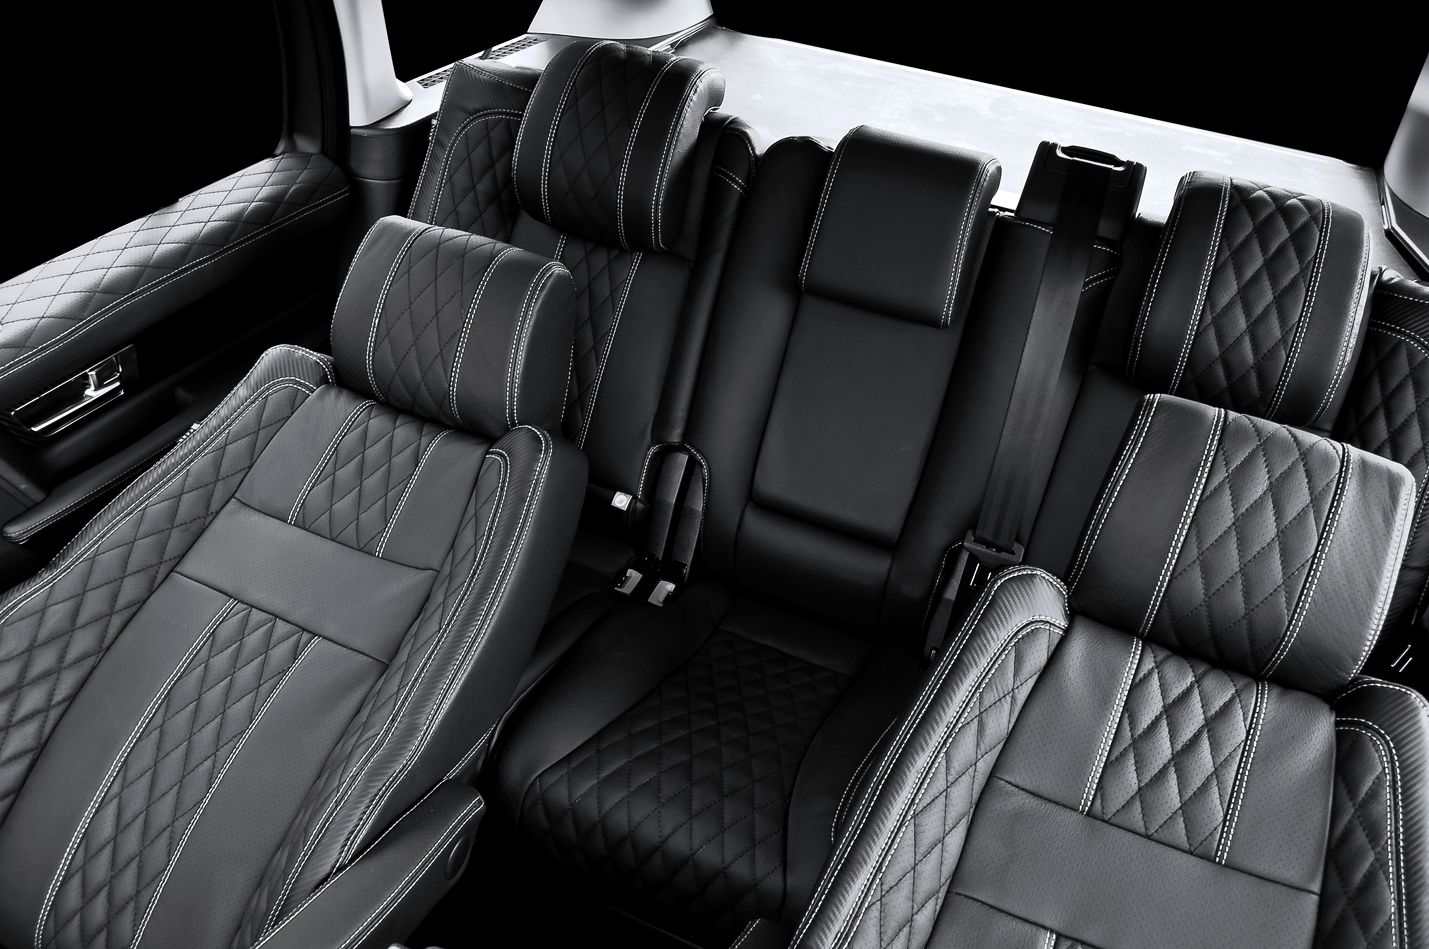 2012 Land Rover Range Rover LE Edition by Kahn Design